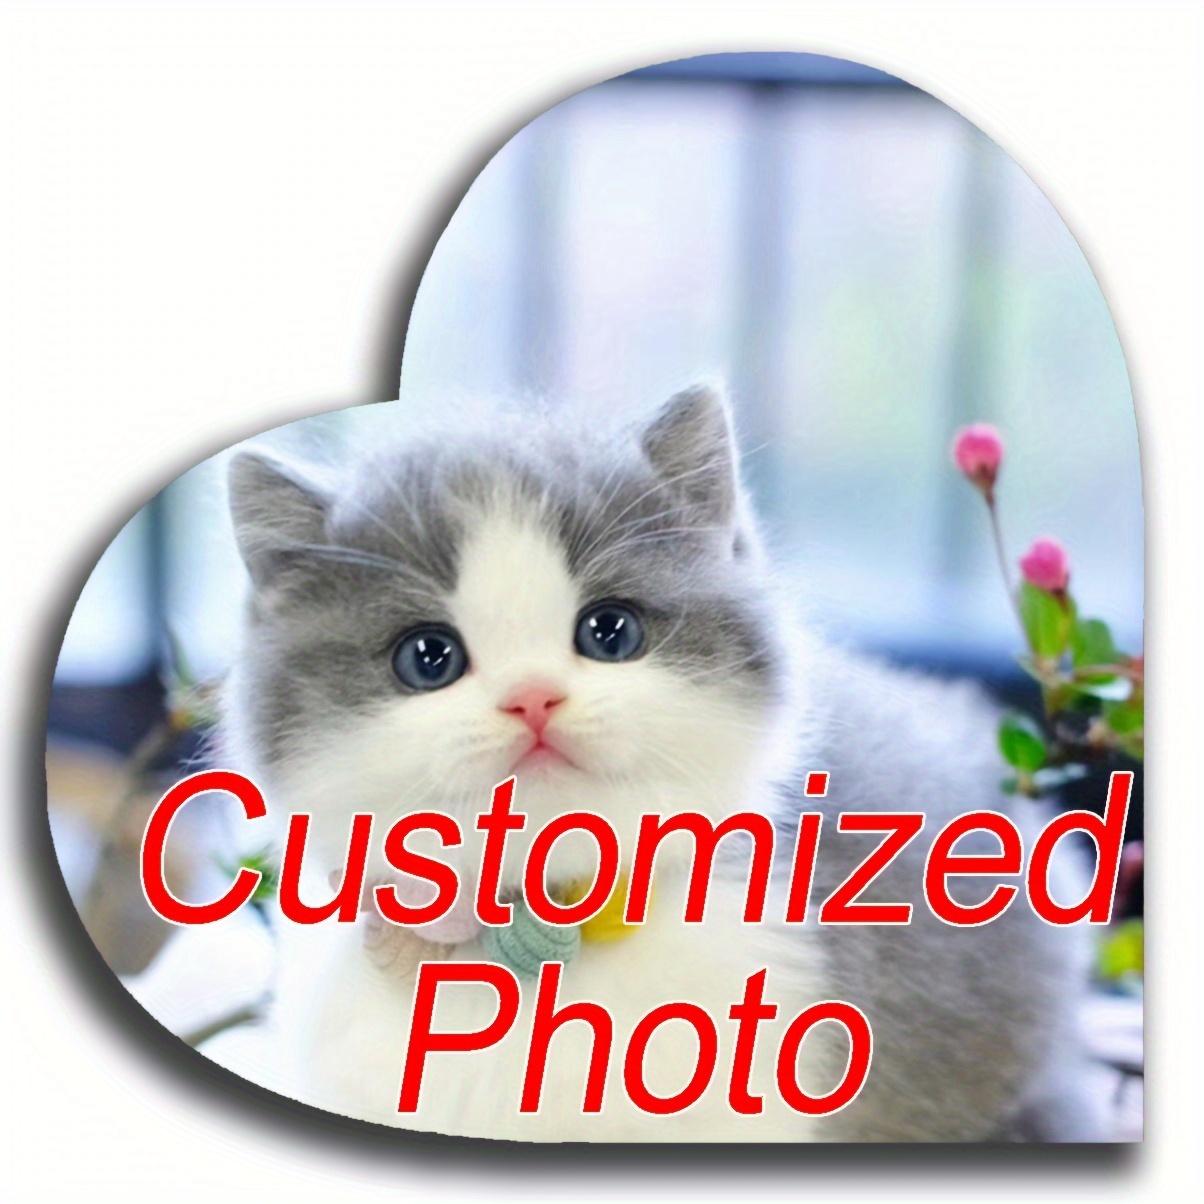 

Custom Heart-shaped Acrylic Photo Plaque 3.93x3.93" - Personalized Cat Memorial Keepsake, Kitten Family Gift, Custom & Office Decor